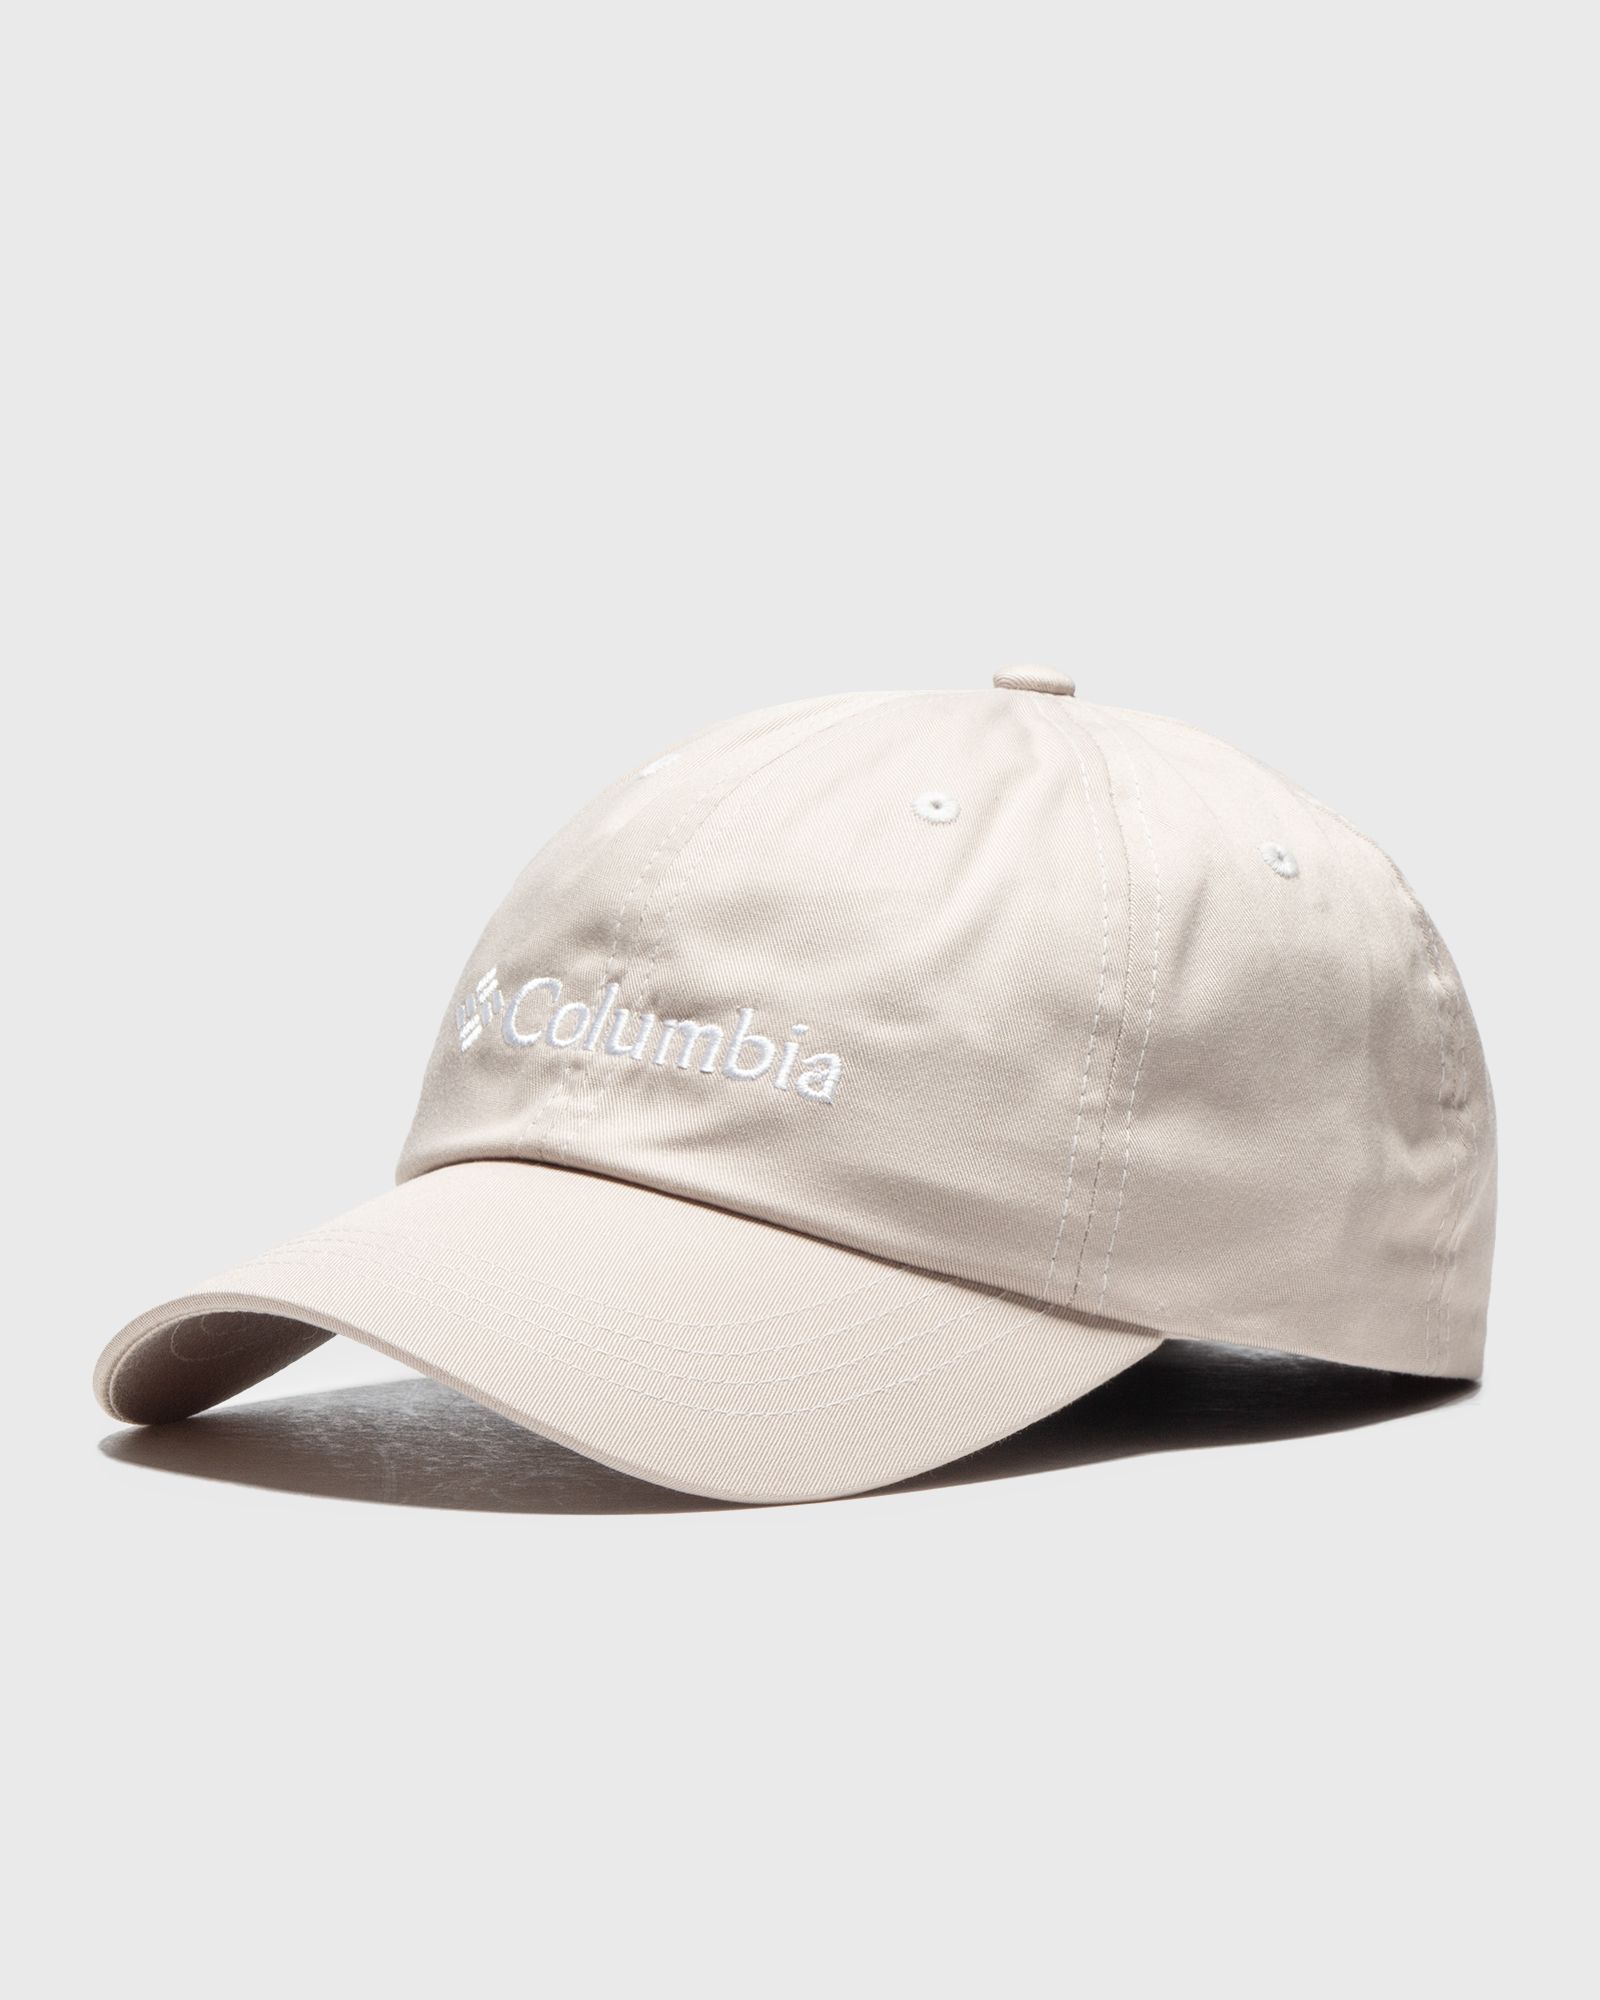 Columbia - roc™ ii ball cap men caps beige in größe:one size